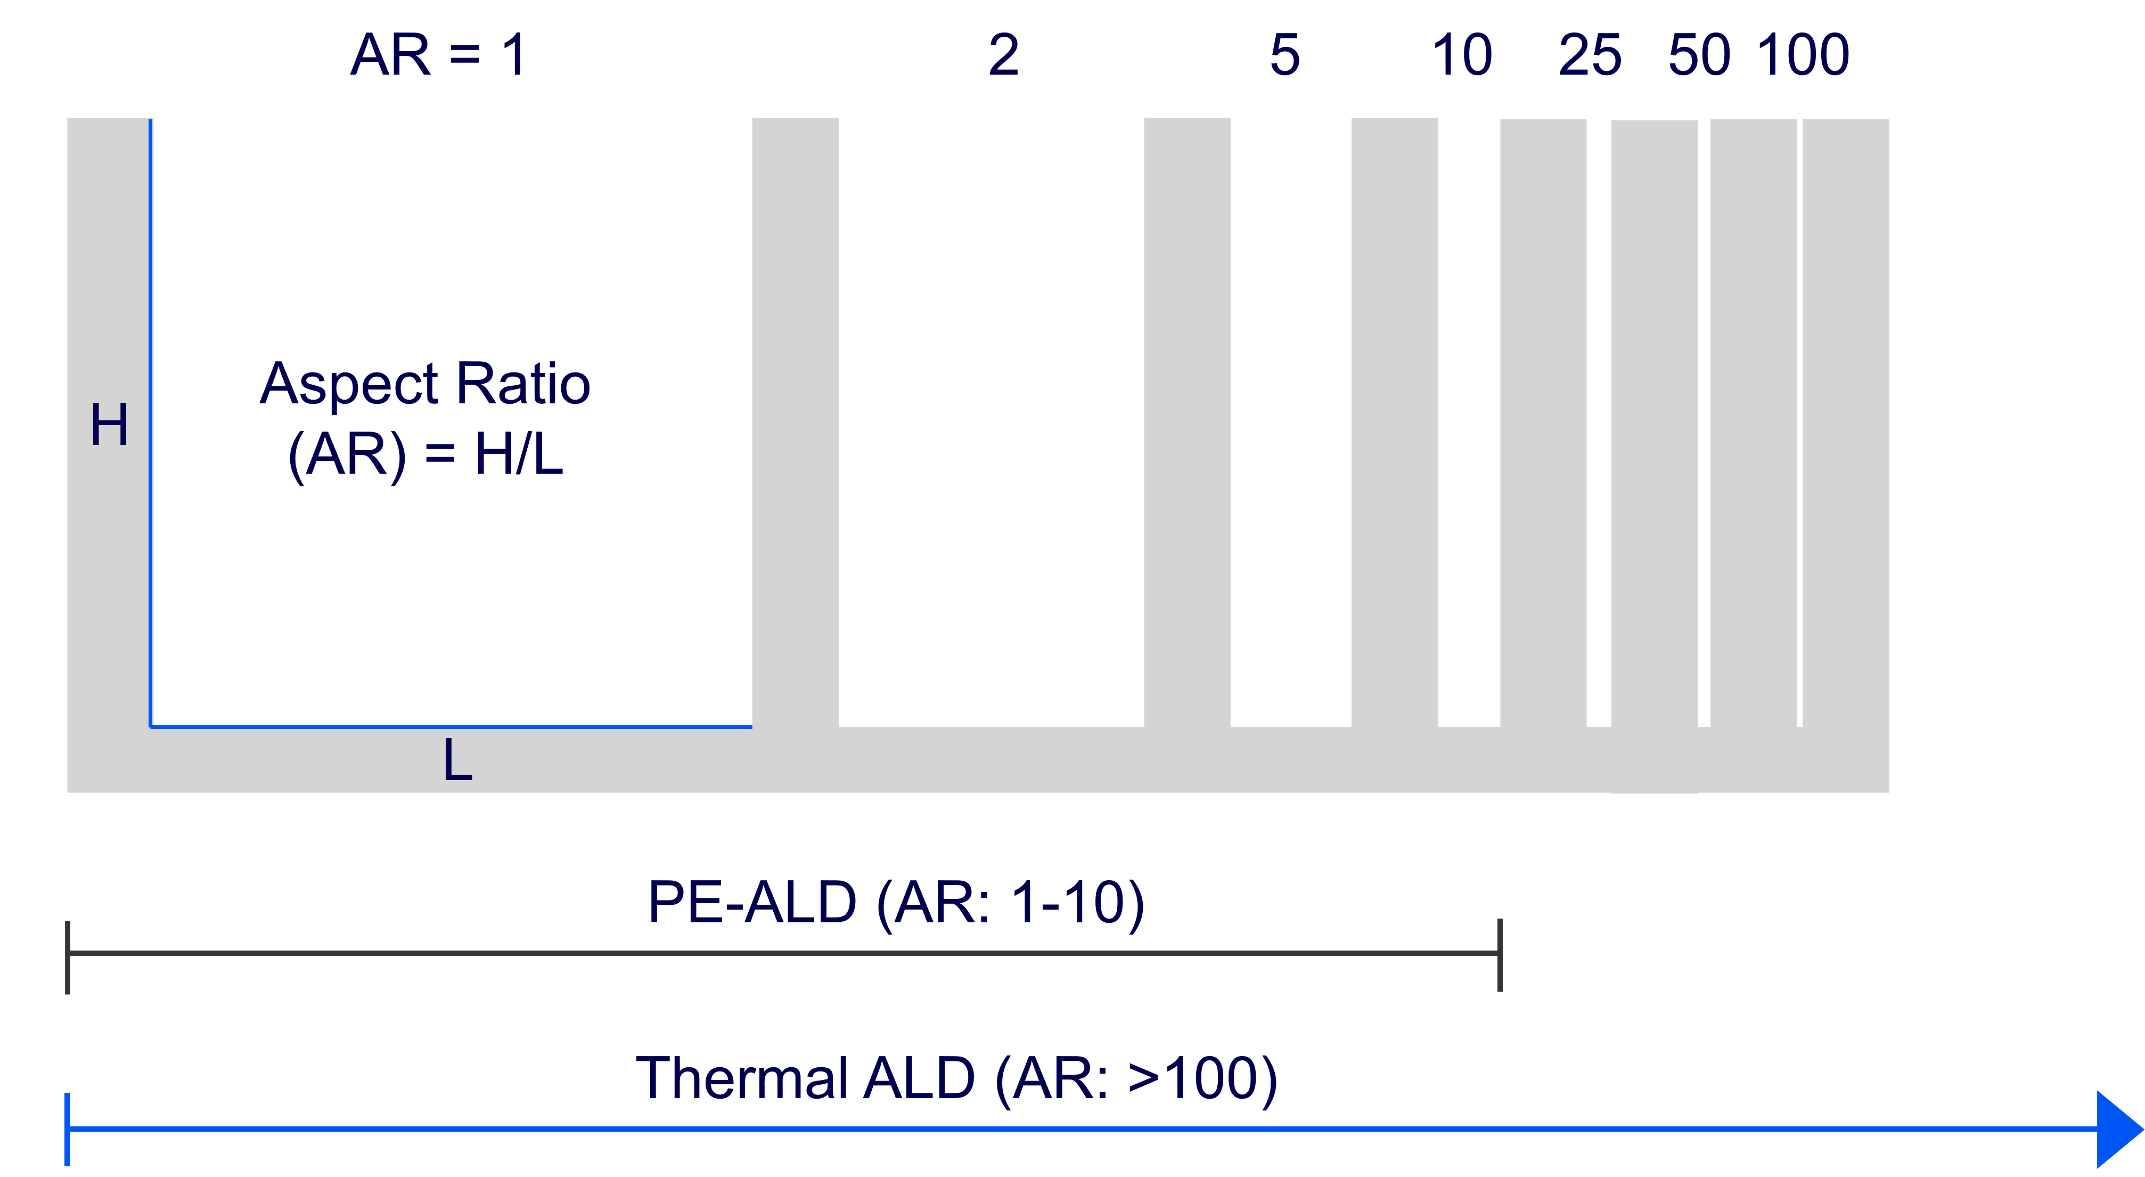 Aspect ratio comparison of thermal and plasma ALD